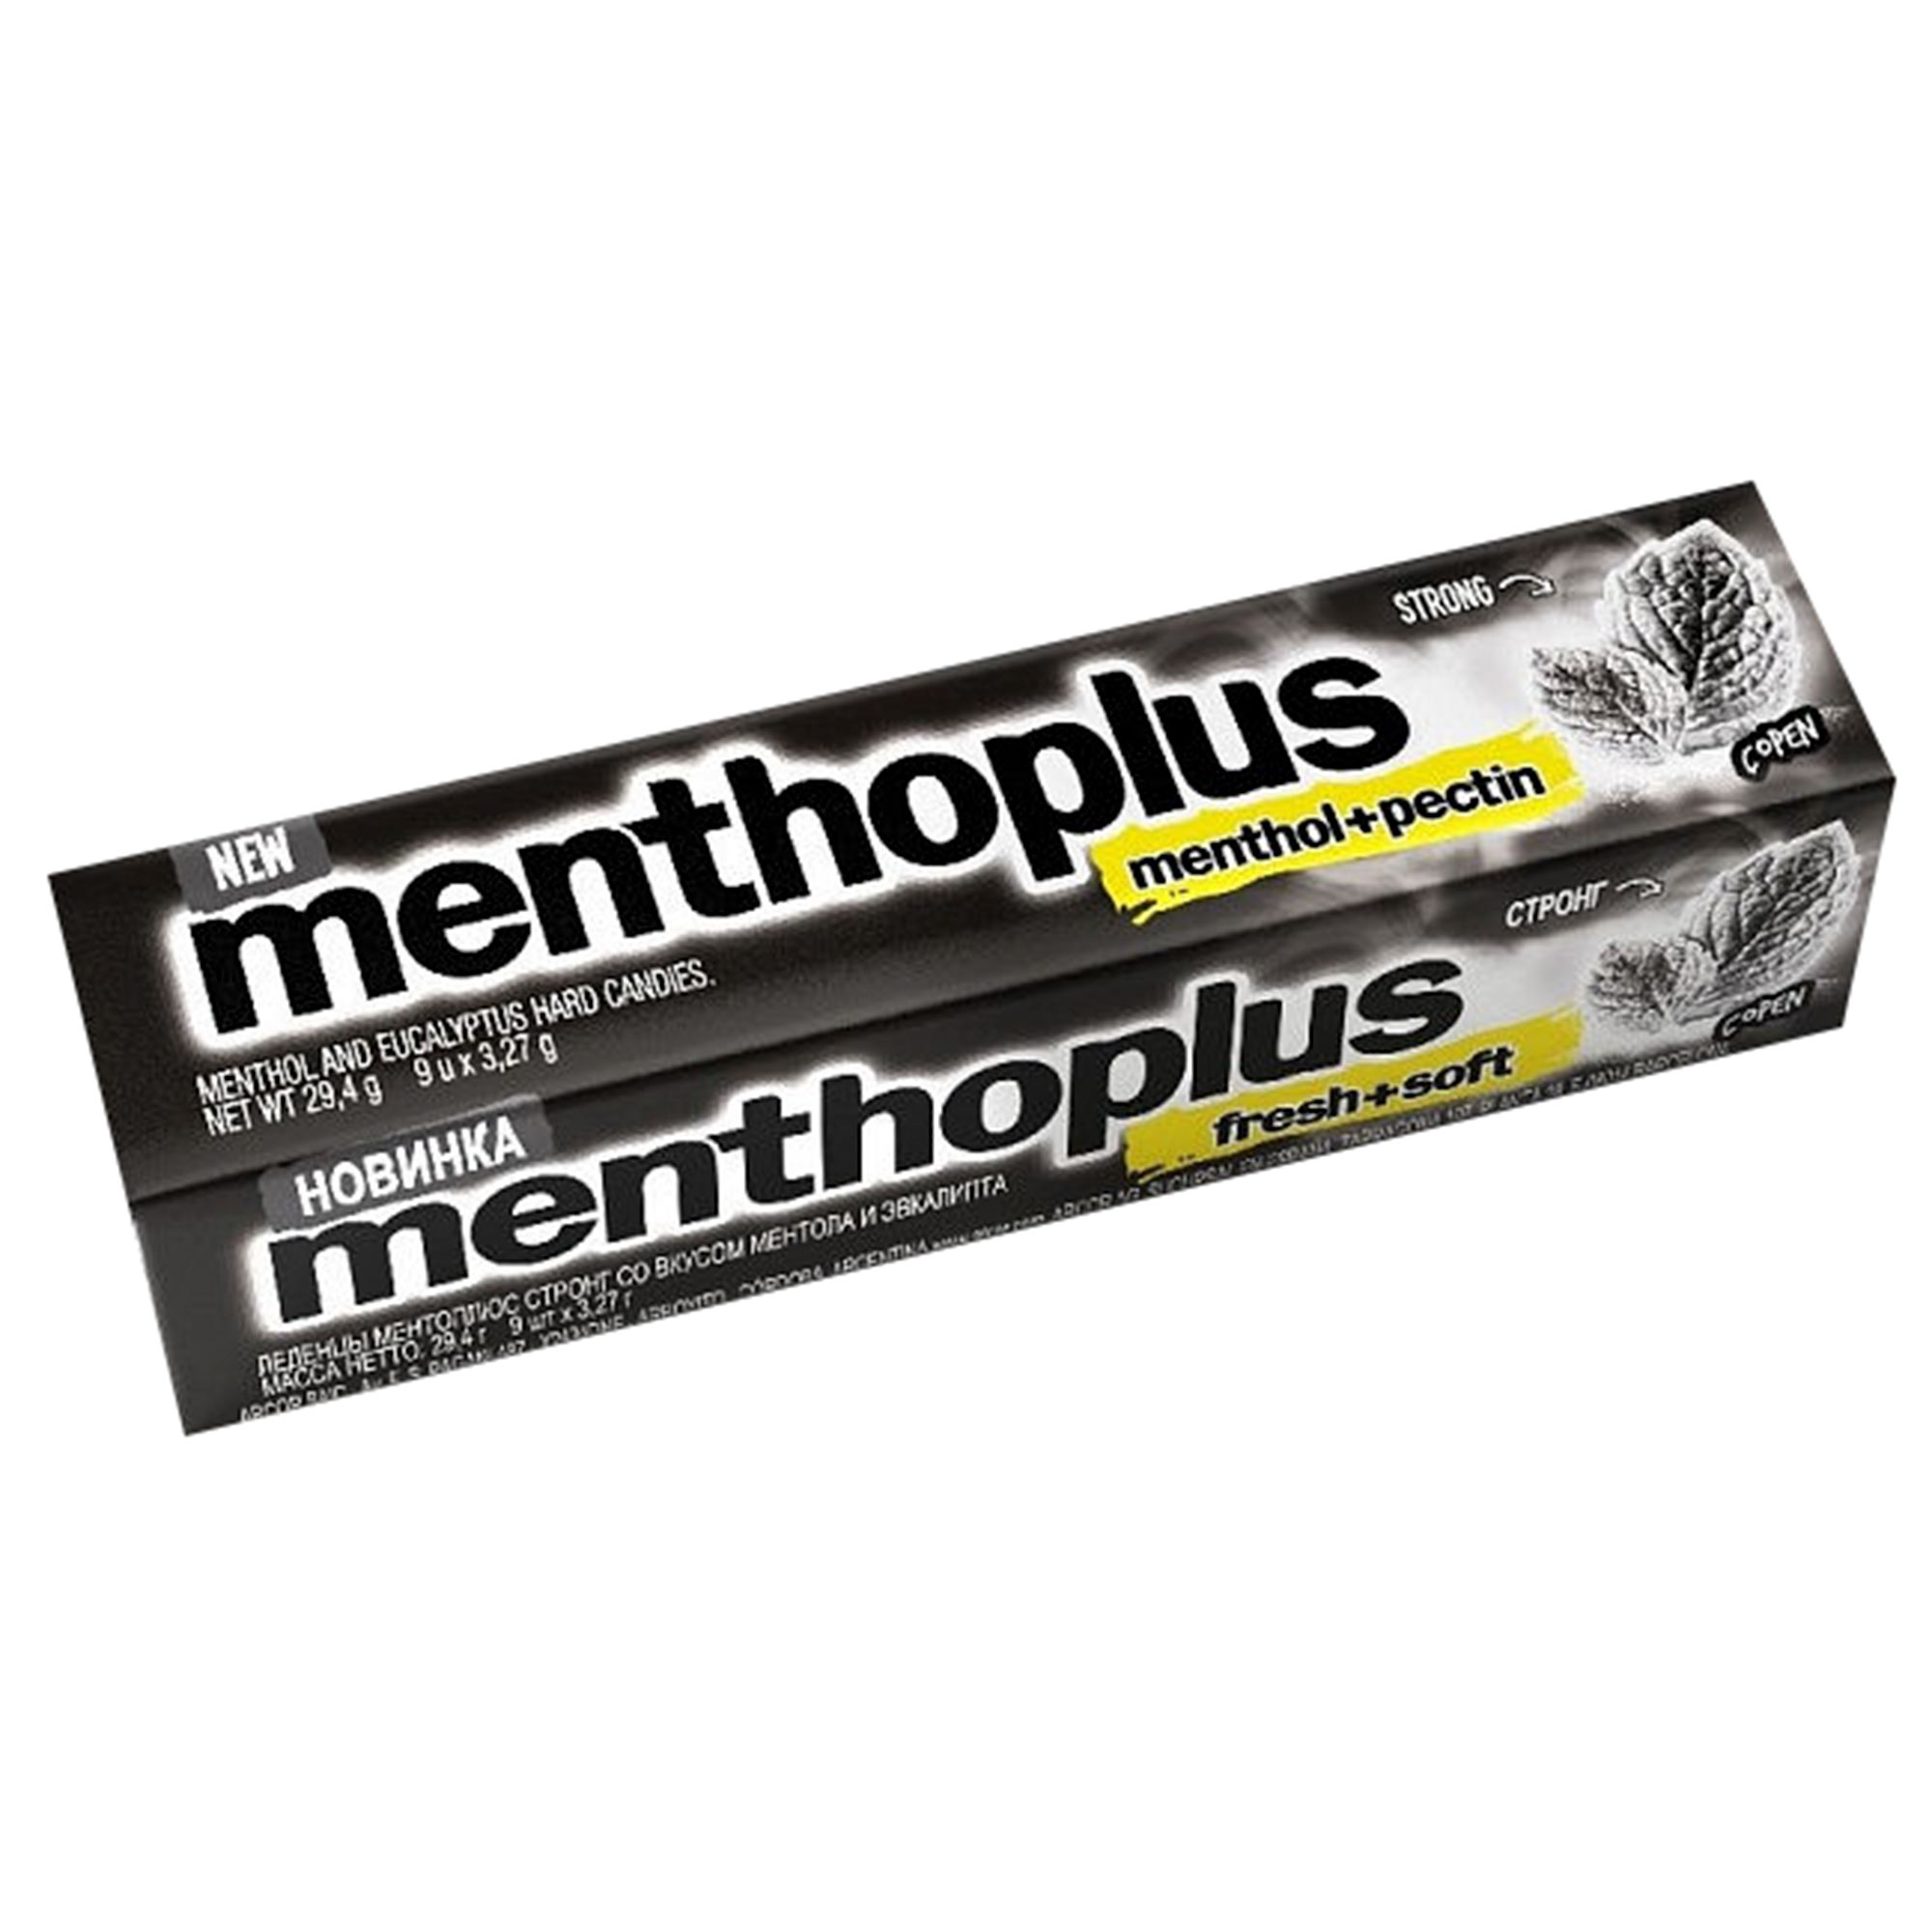 Леденцы Menthoplus STRONG  29,4 г леденцы бобс дыня клубника чай 35 г